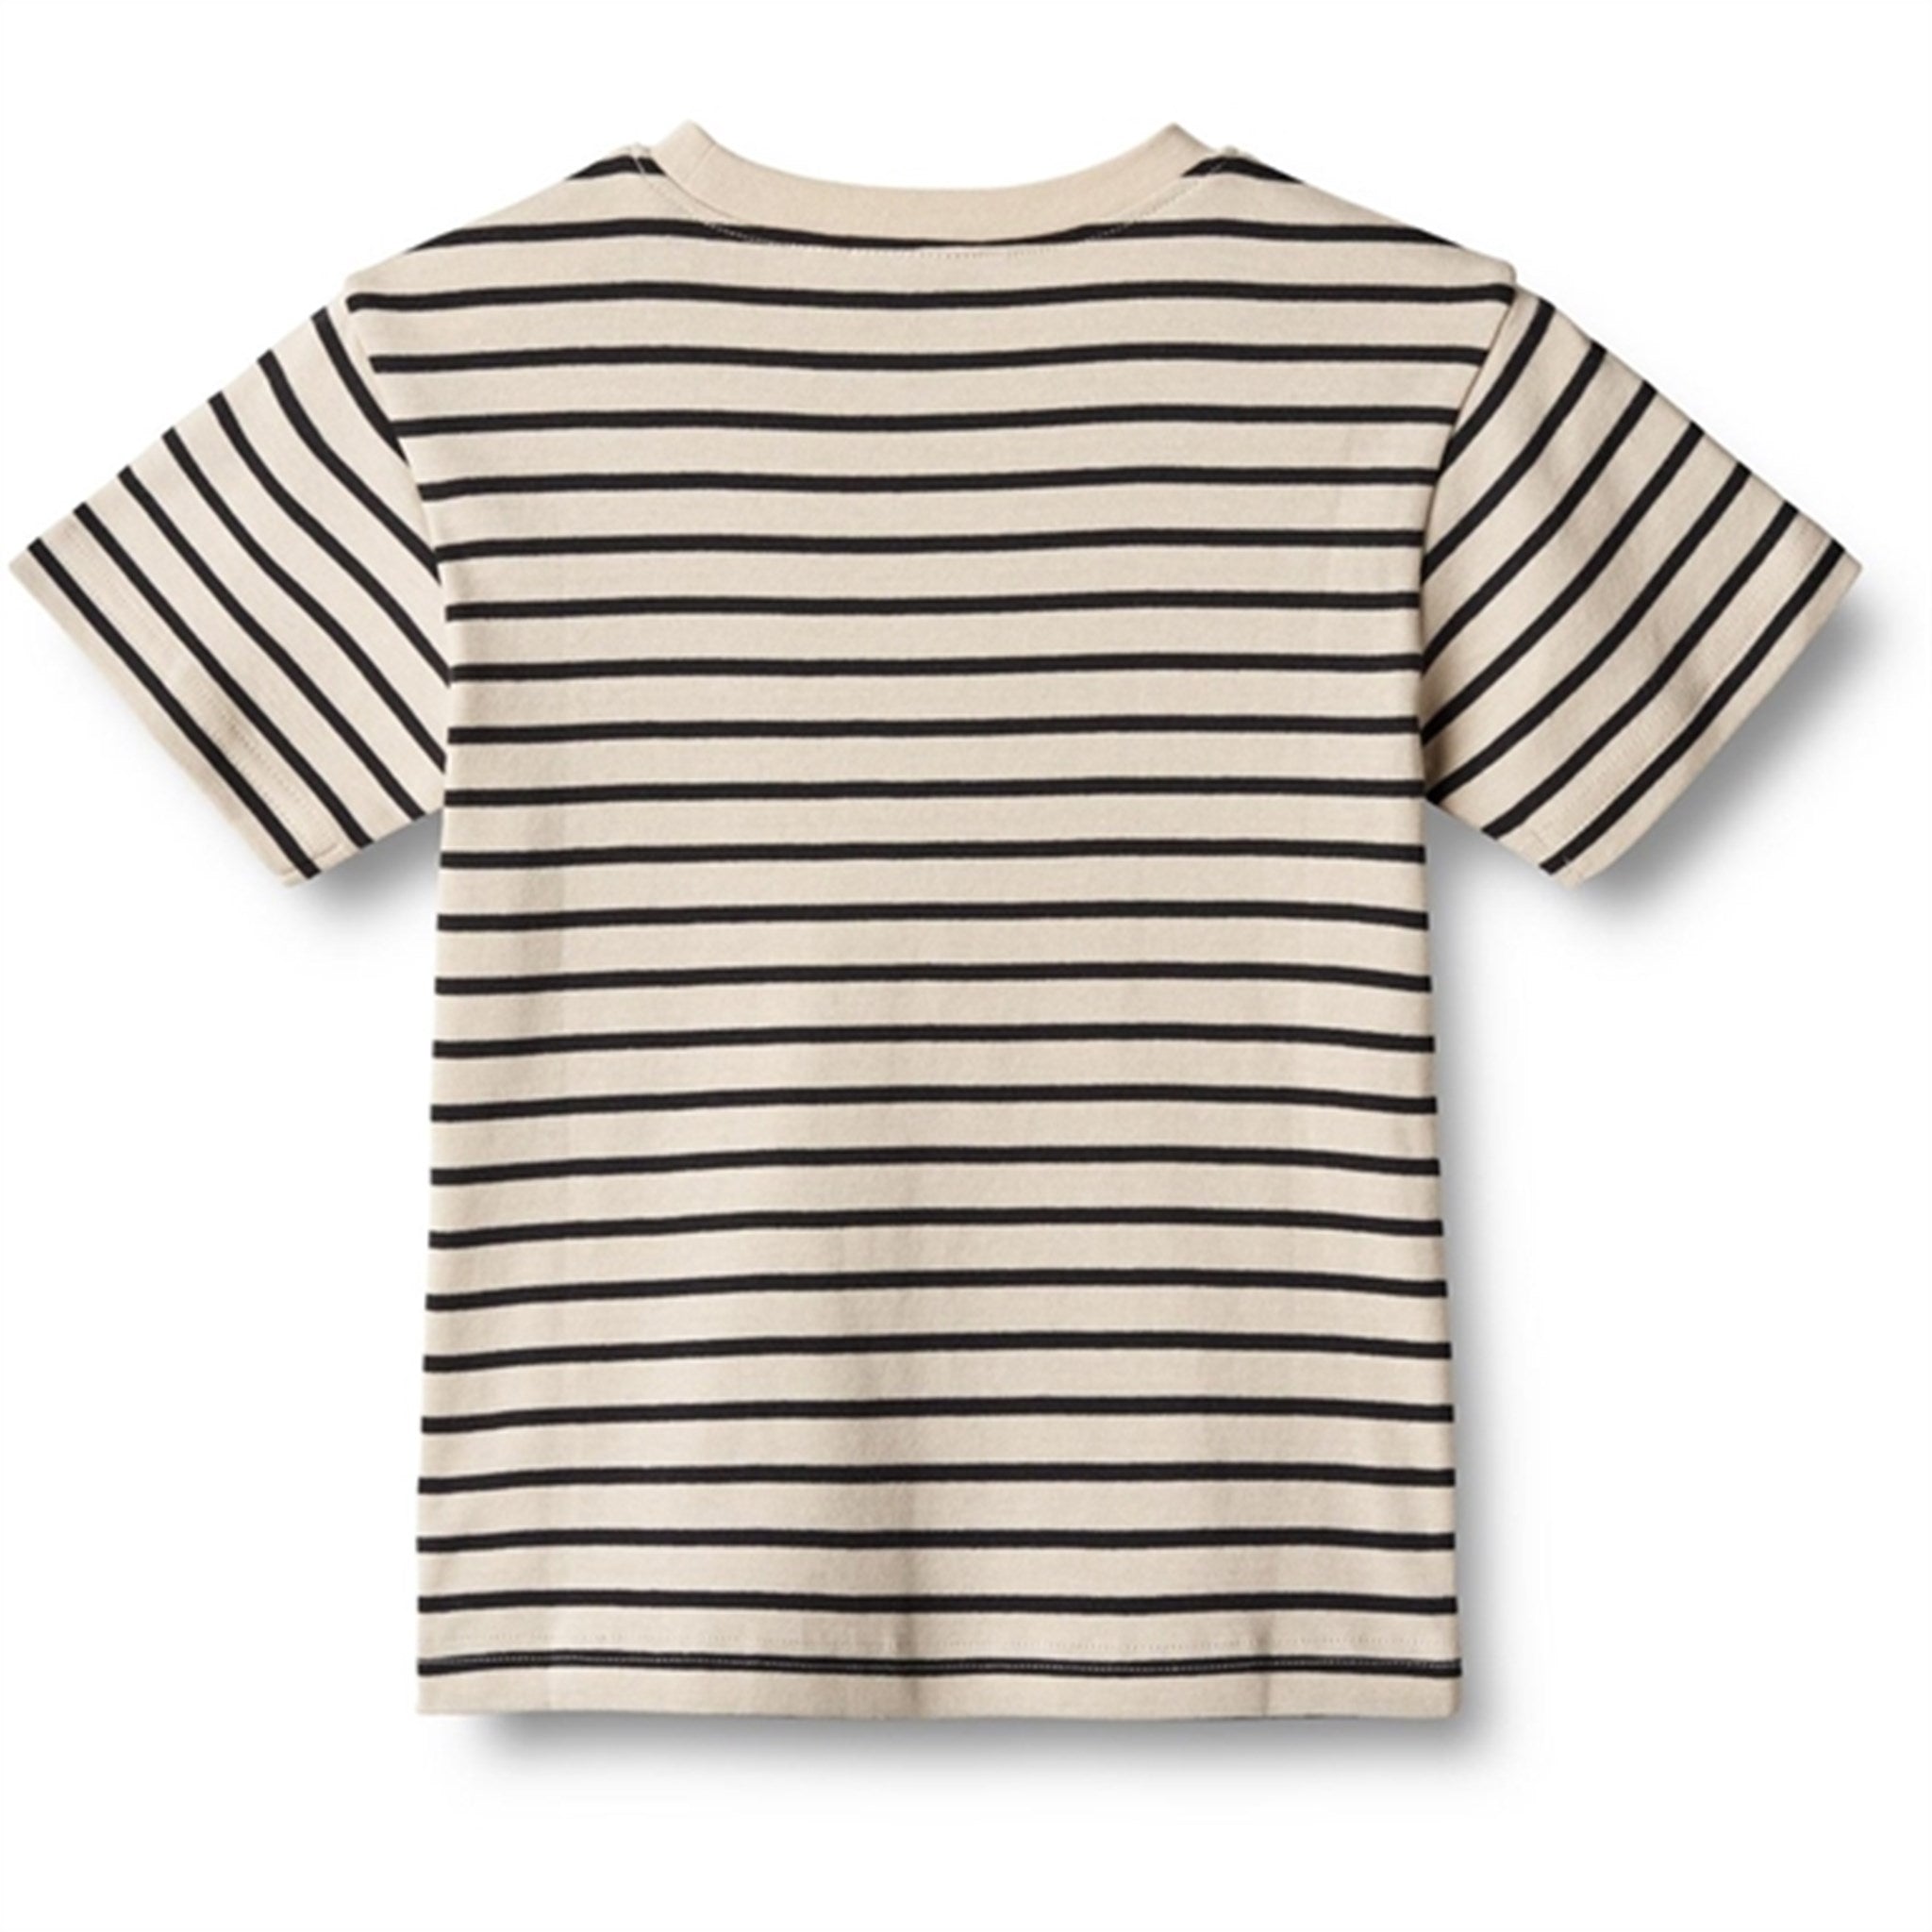 Wheat Navy Stripe T-shirt Fabian 2